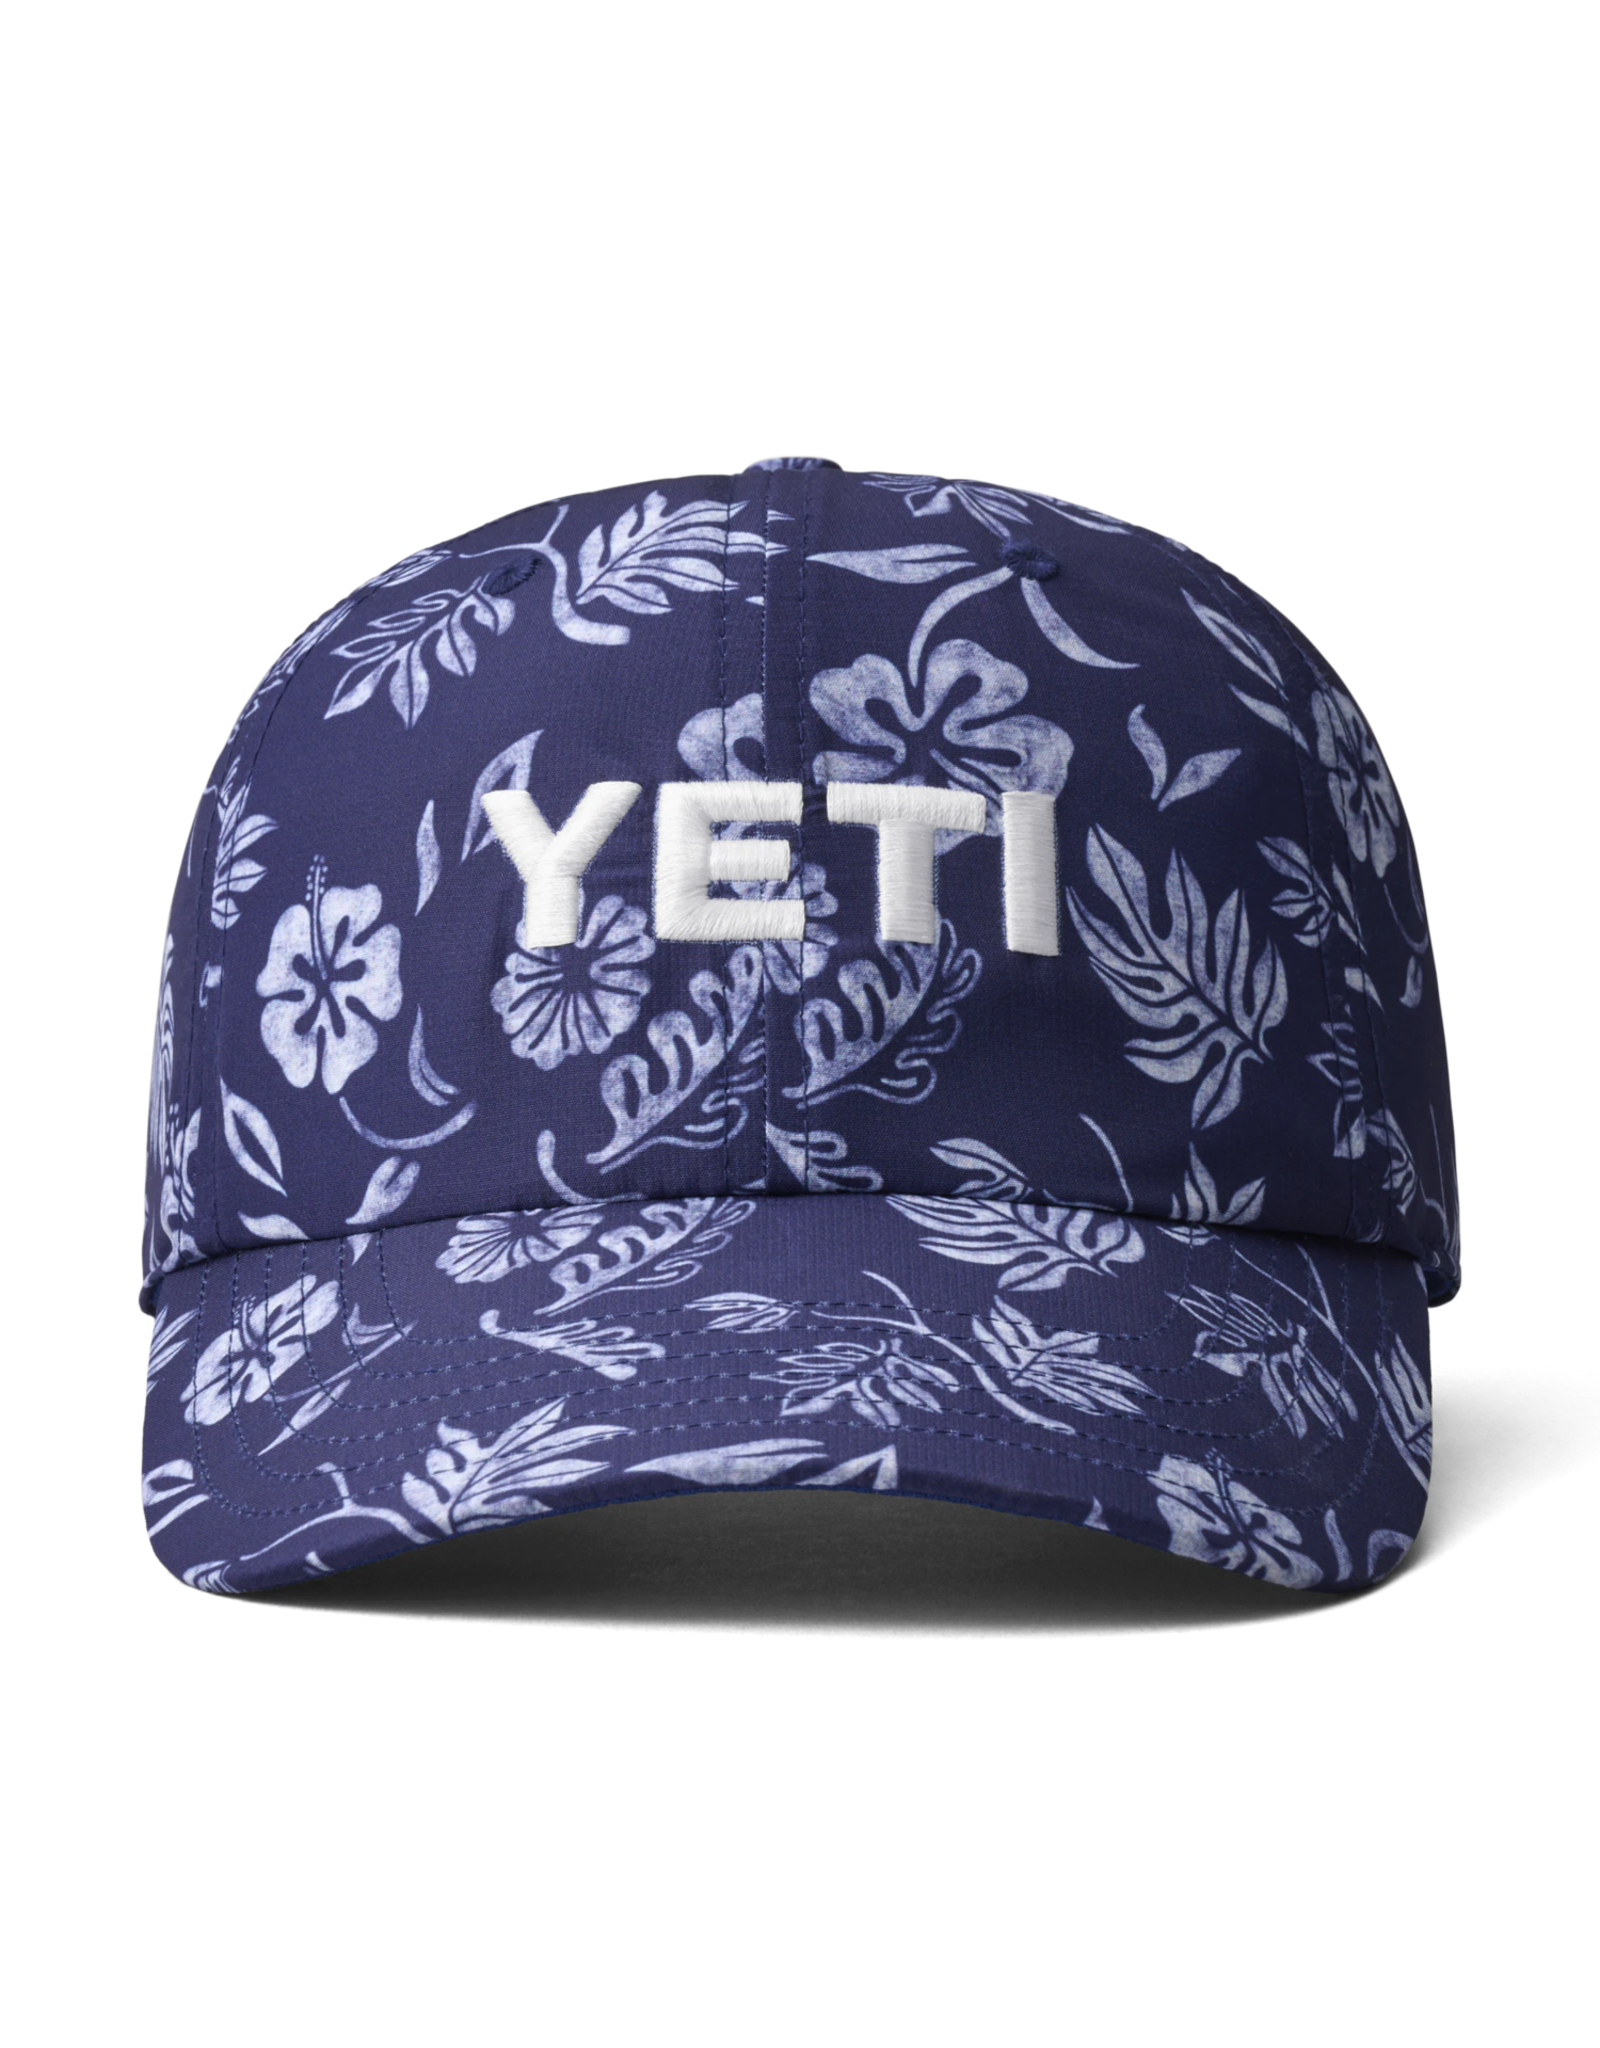 Yeti Yeti Flip Print Baseball Cap - Navy